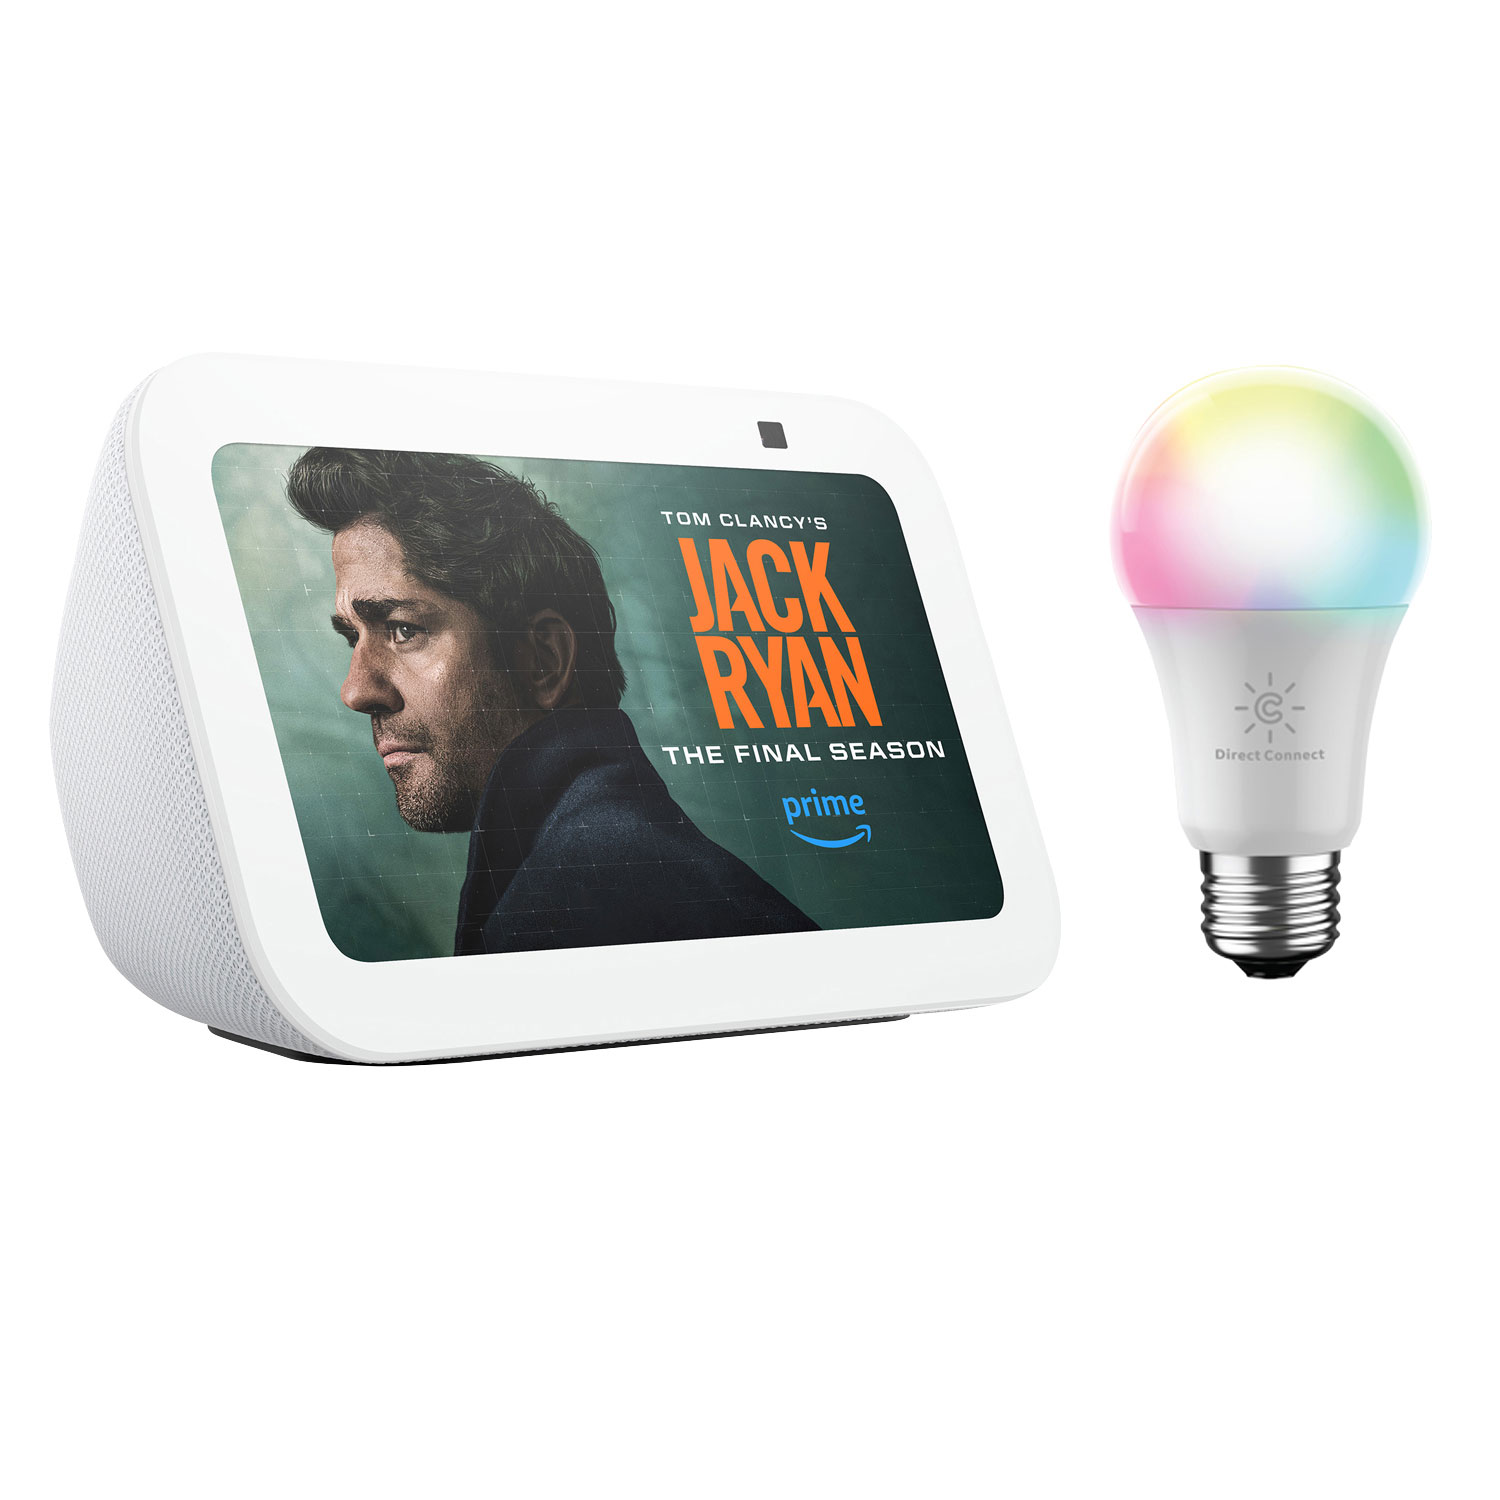 Amazon Echo Show 5 (3rd Gen) Smart Display with Alexa & Smart LED Light Bulb- Glacier White/ Multi-Colour